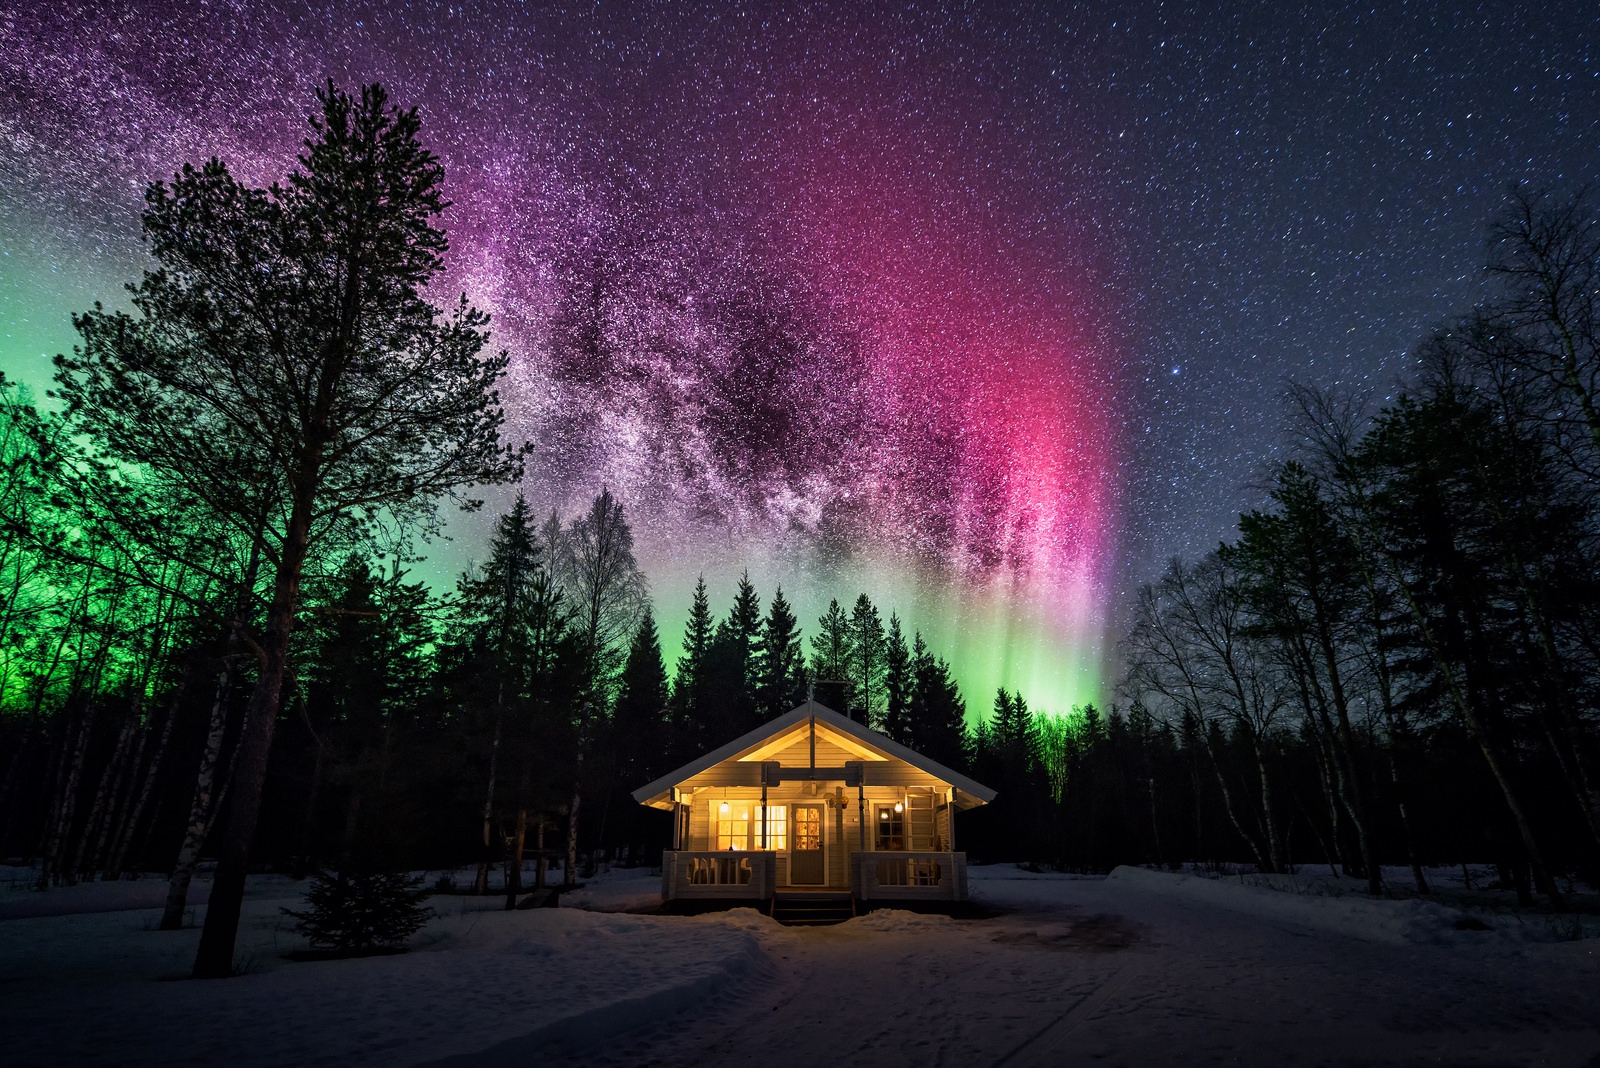 684550 descargar imagen aurora boreal, tierra/naturaleza: fondos de pantalla y protectores de pantalla gratis